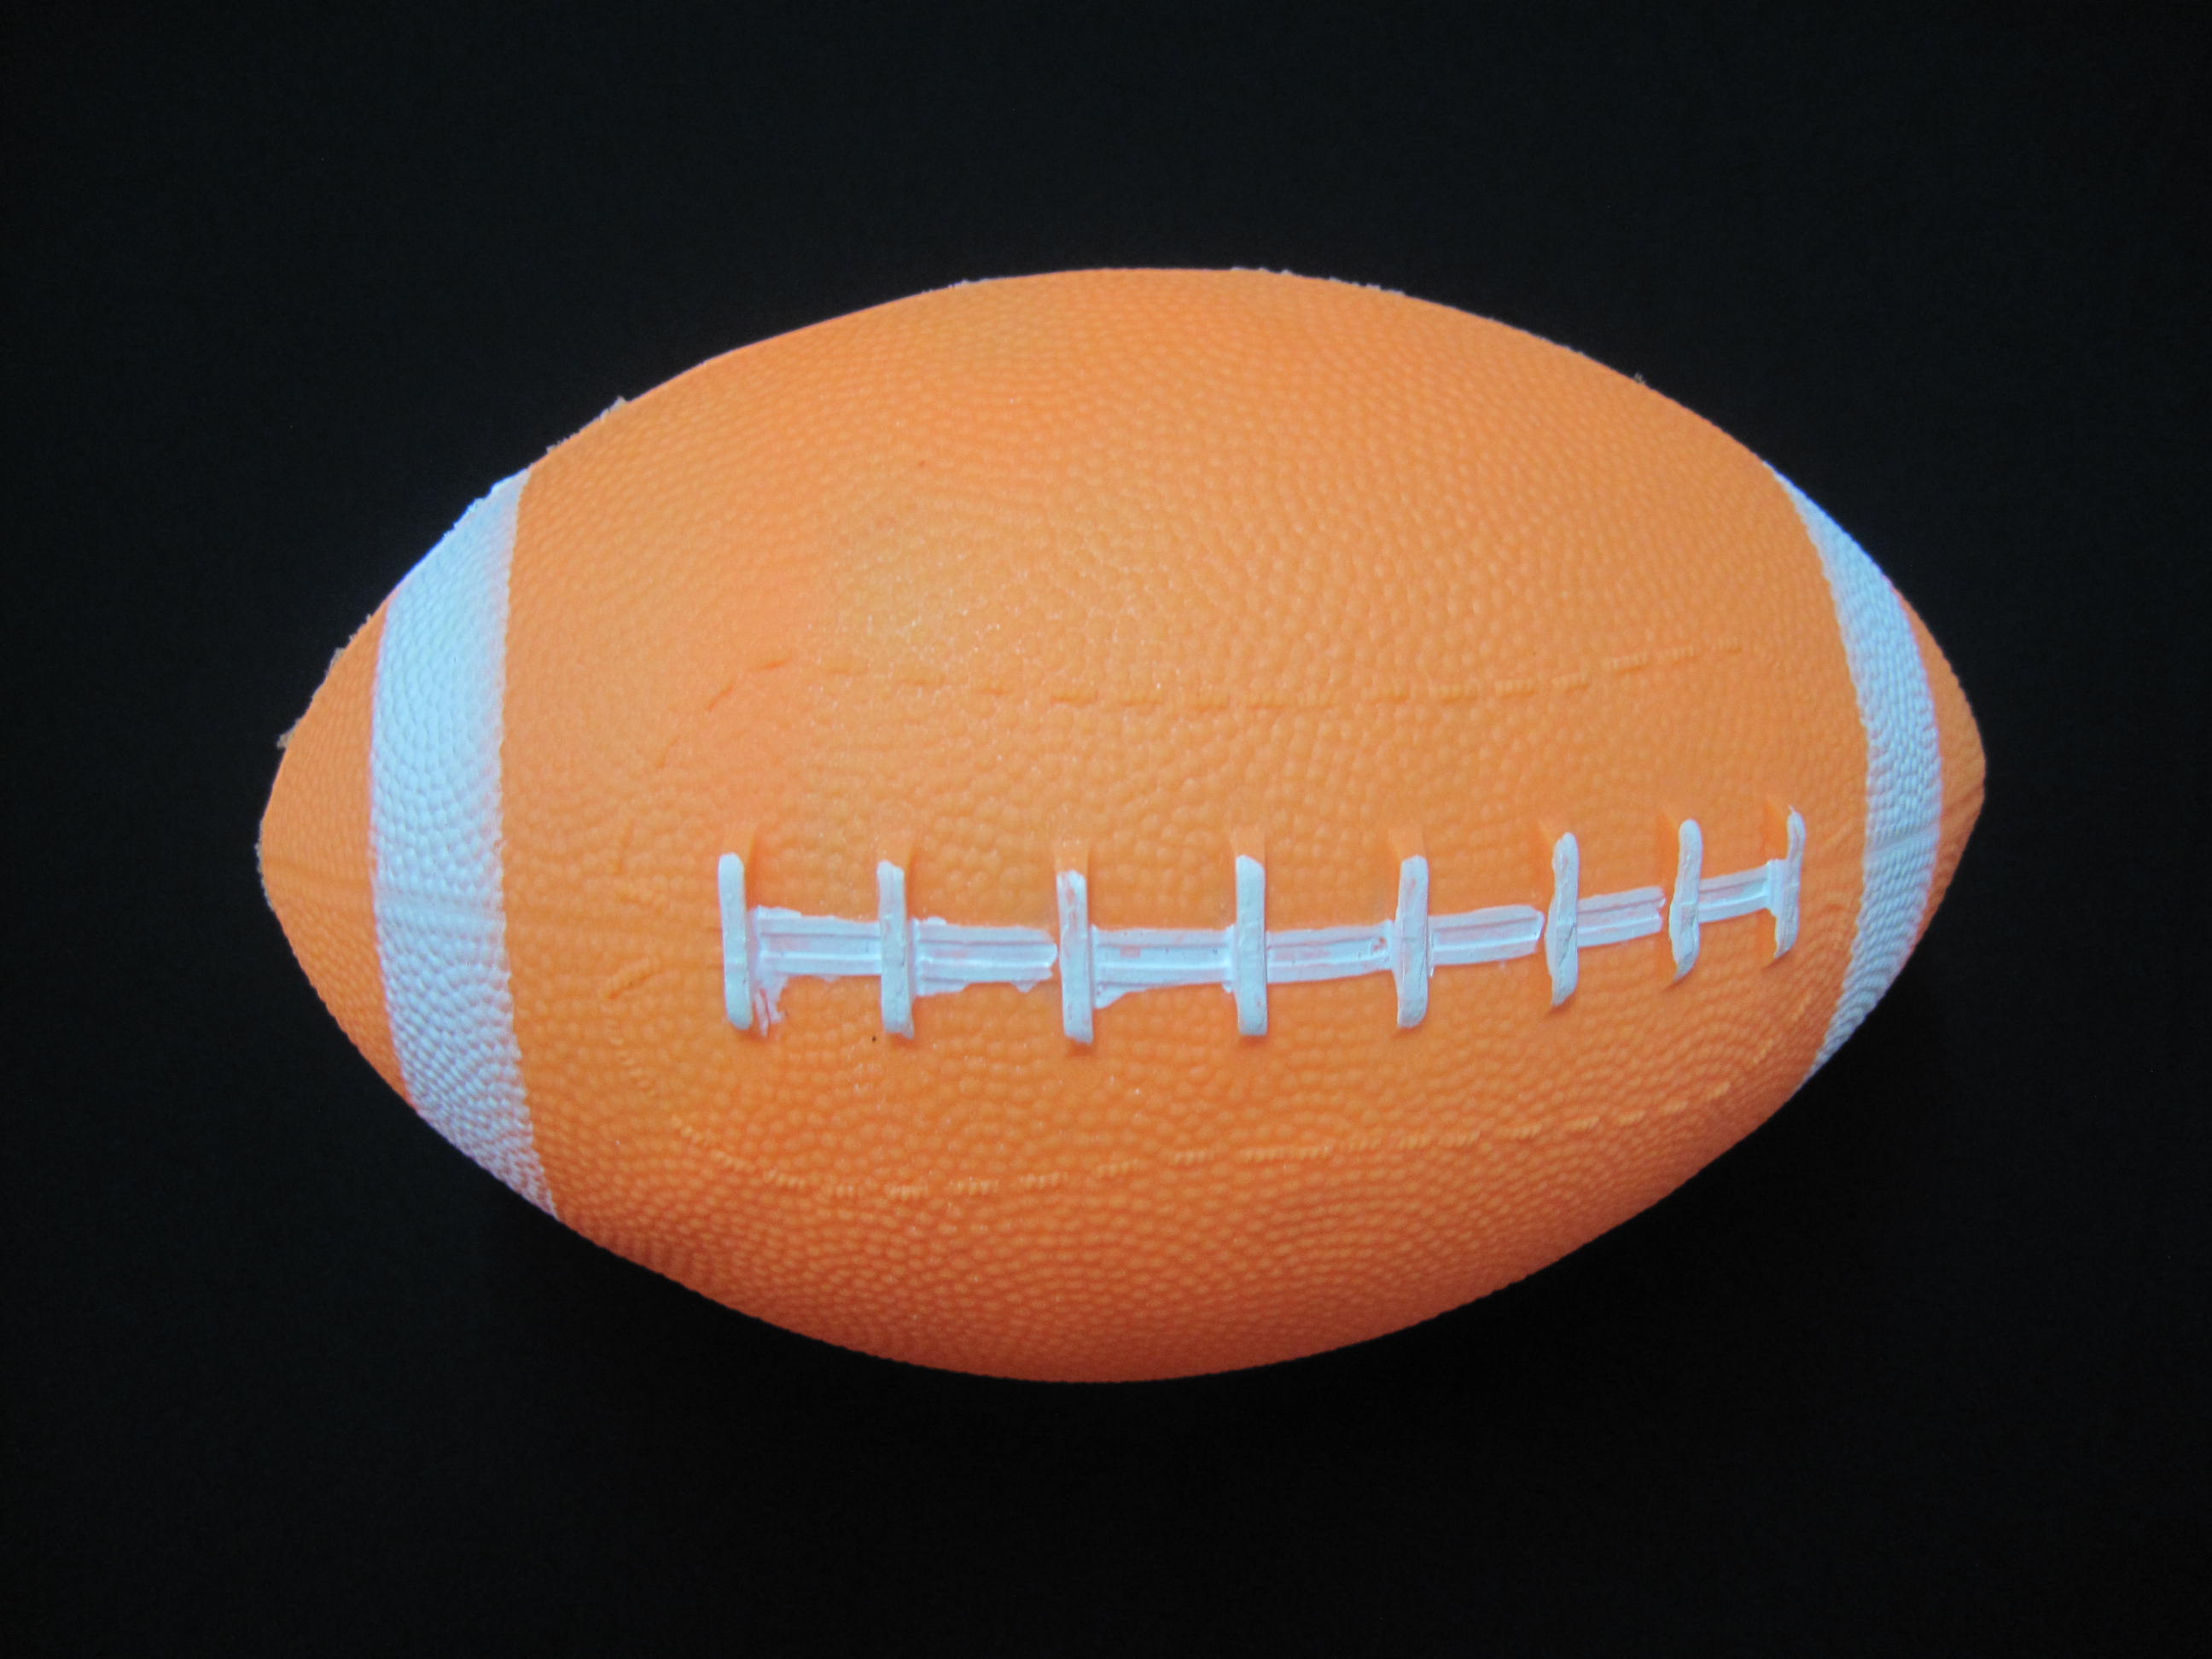 American Football / Rugby Ball-PVC ផ្ទាល់ខ្លួន មានការរចនាខុសៗគ្នា